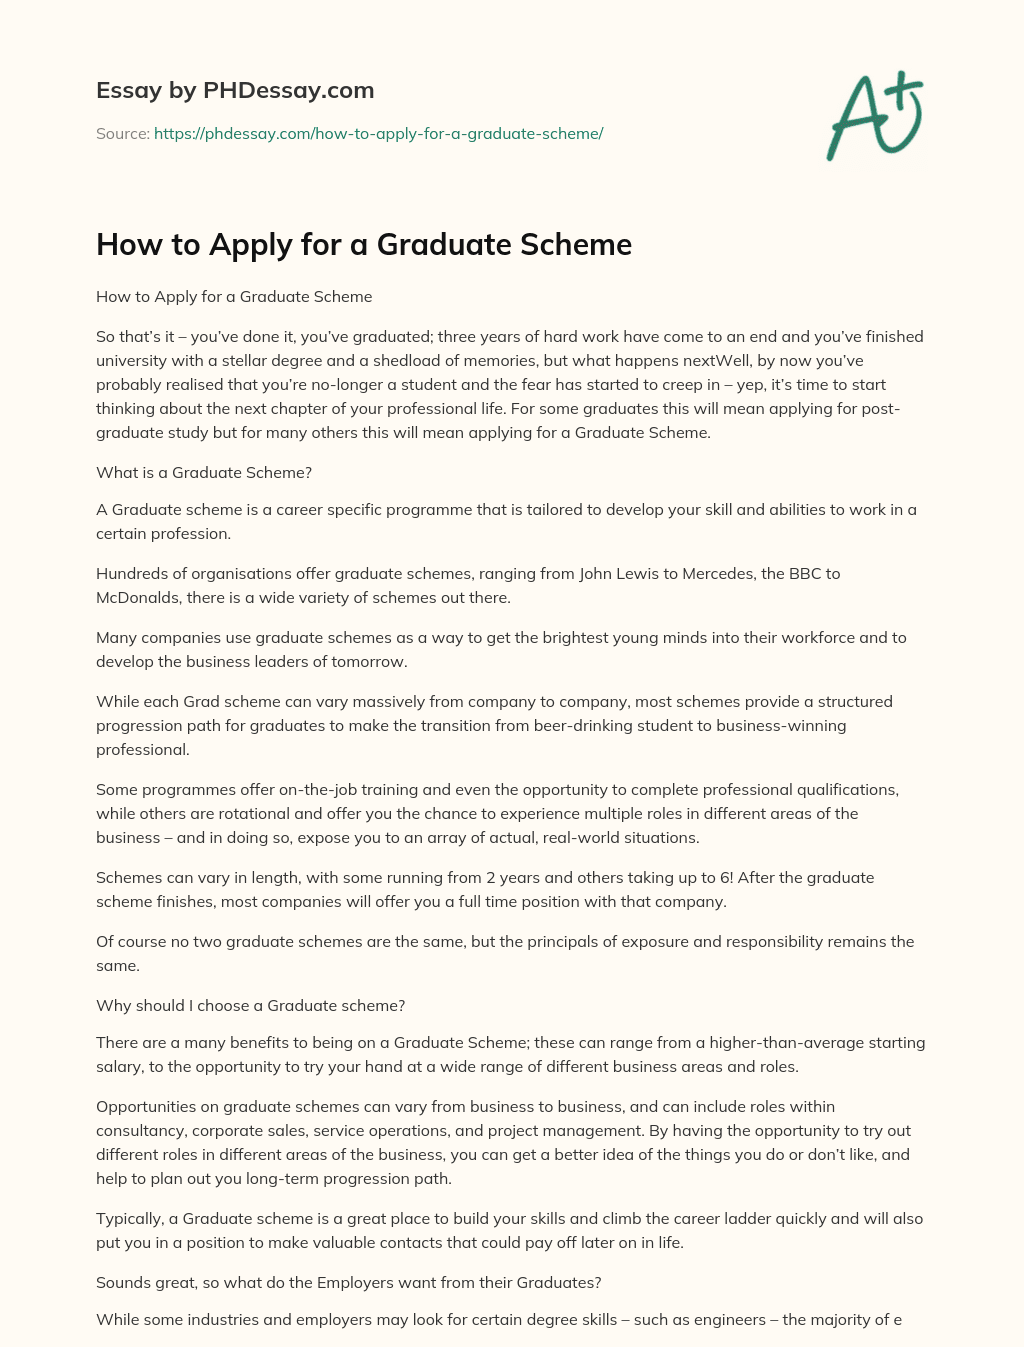 How to Apply for a Graduate Scheme essay